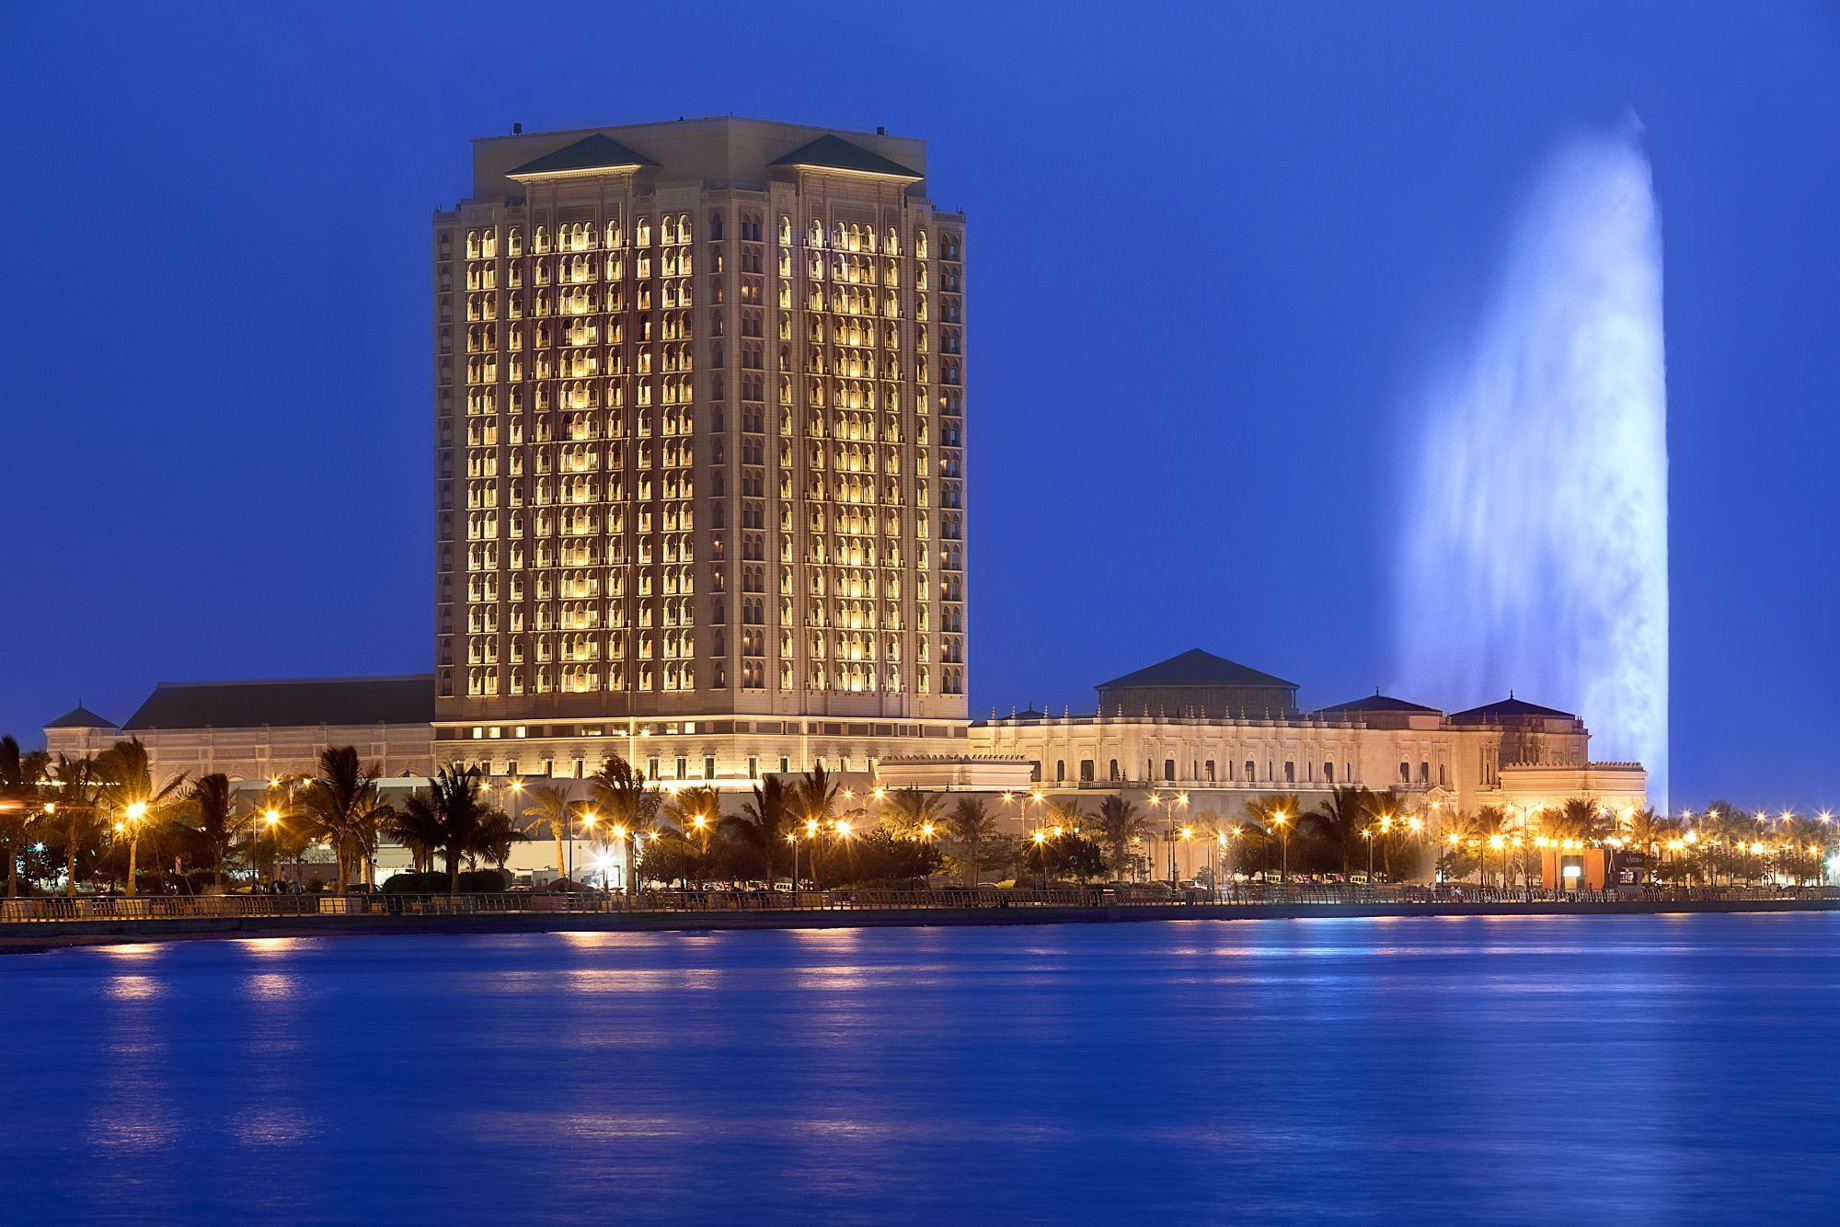 The Ritz-Carlton, Jeddah Hotel - Jeddah, Saudi Arabia - Hotel Exterior Night View